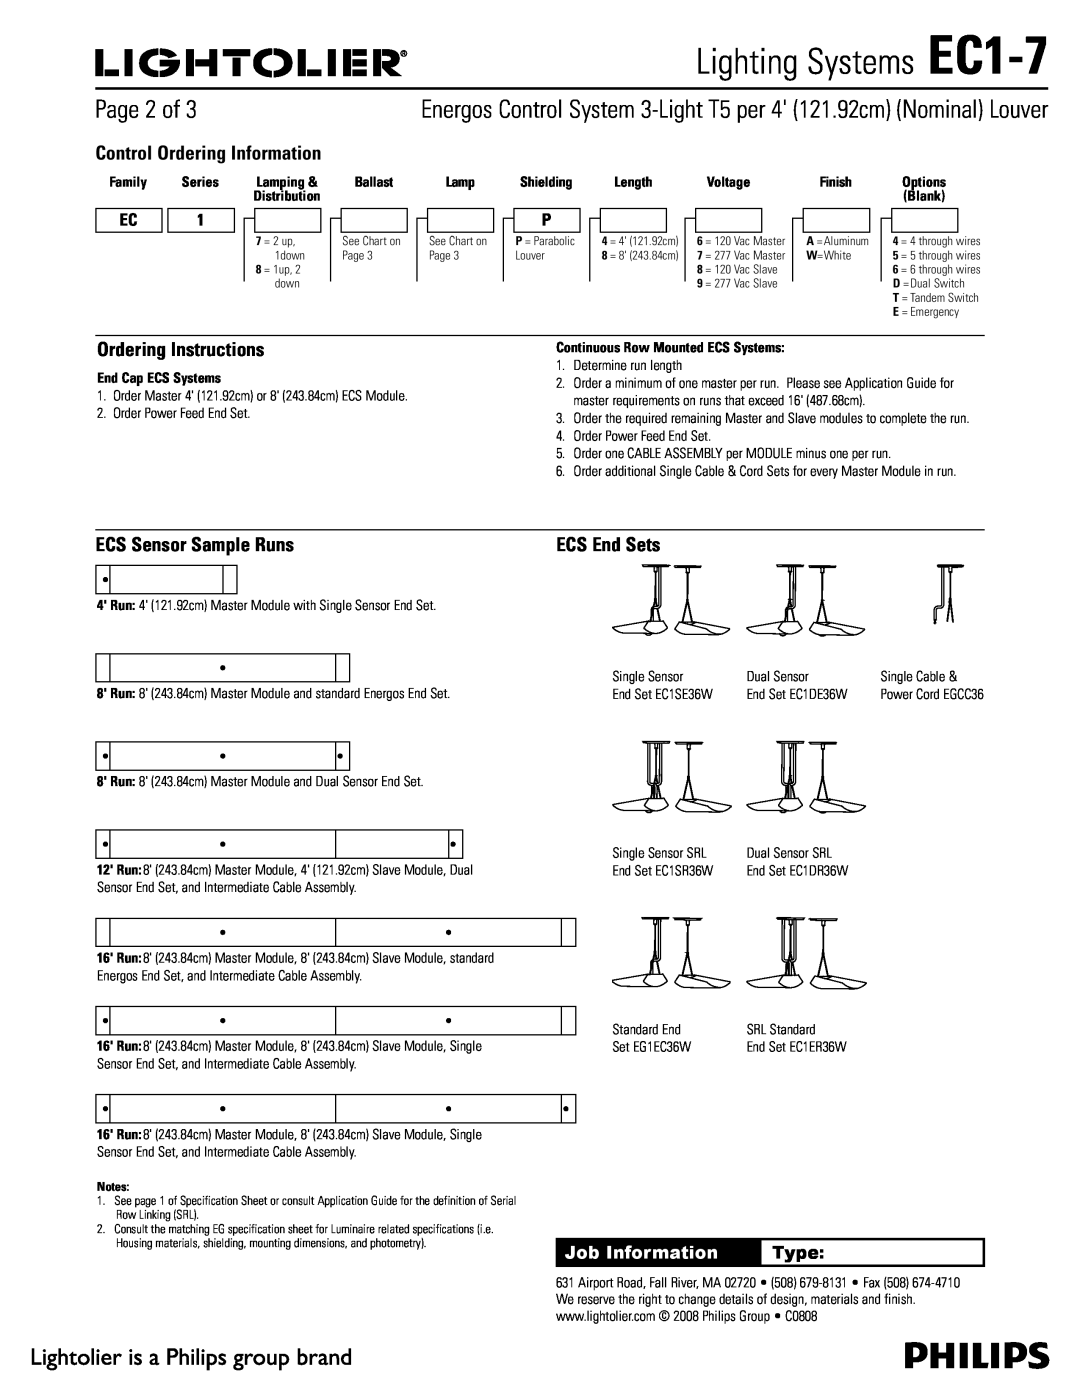 Lightolier EC1-7 Page 2 of, Control Ordering Information, Ordering Instructions, ECS Sensor Sample Runs, Type 